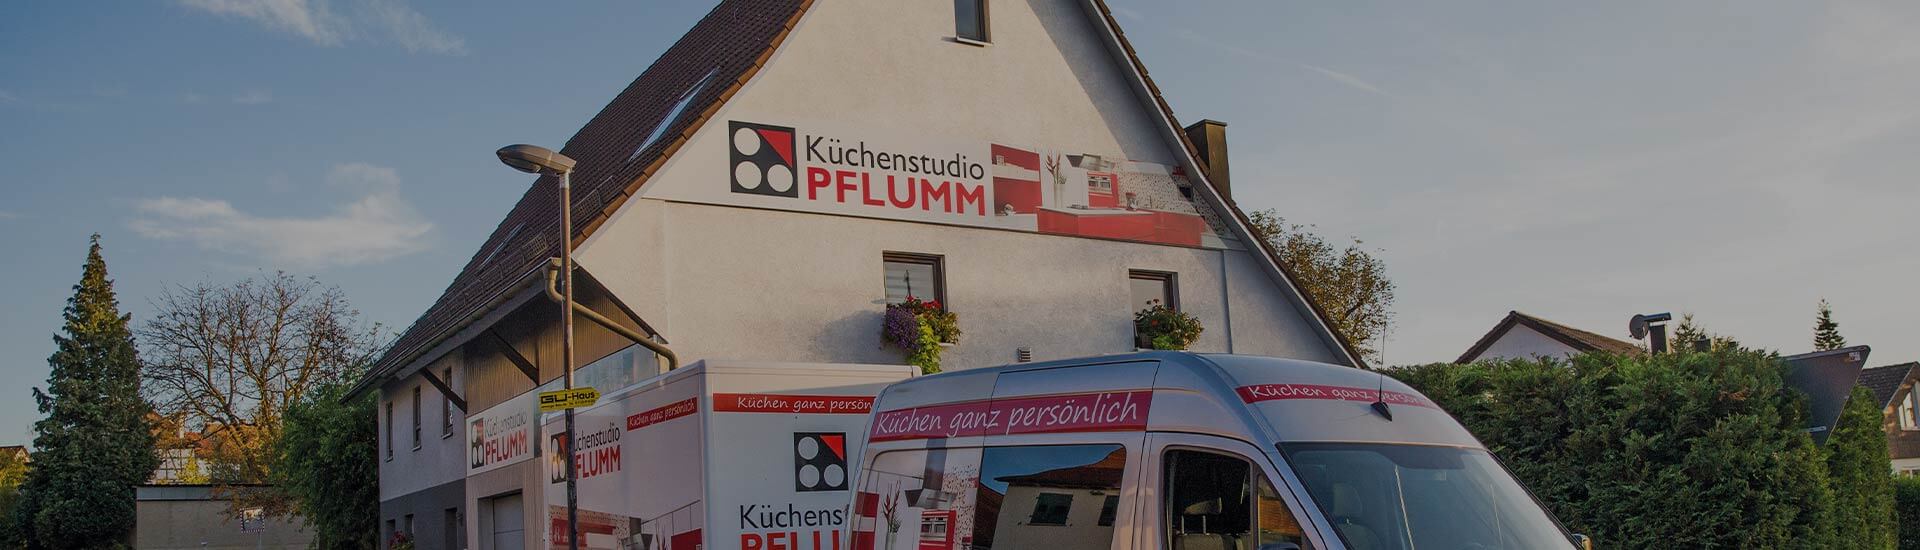 Kontakt & Anfahrt Küchenstudio Pflumm